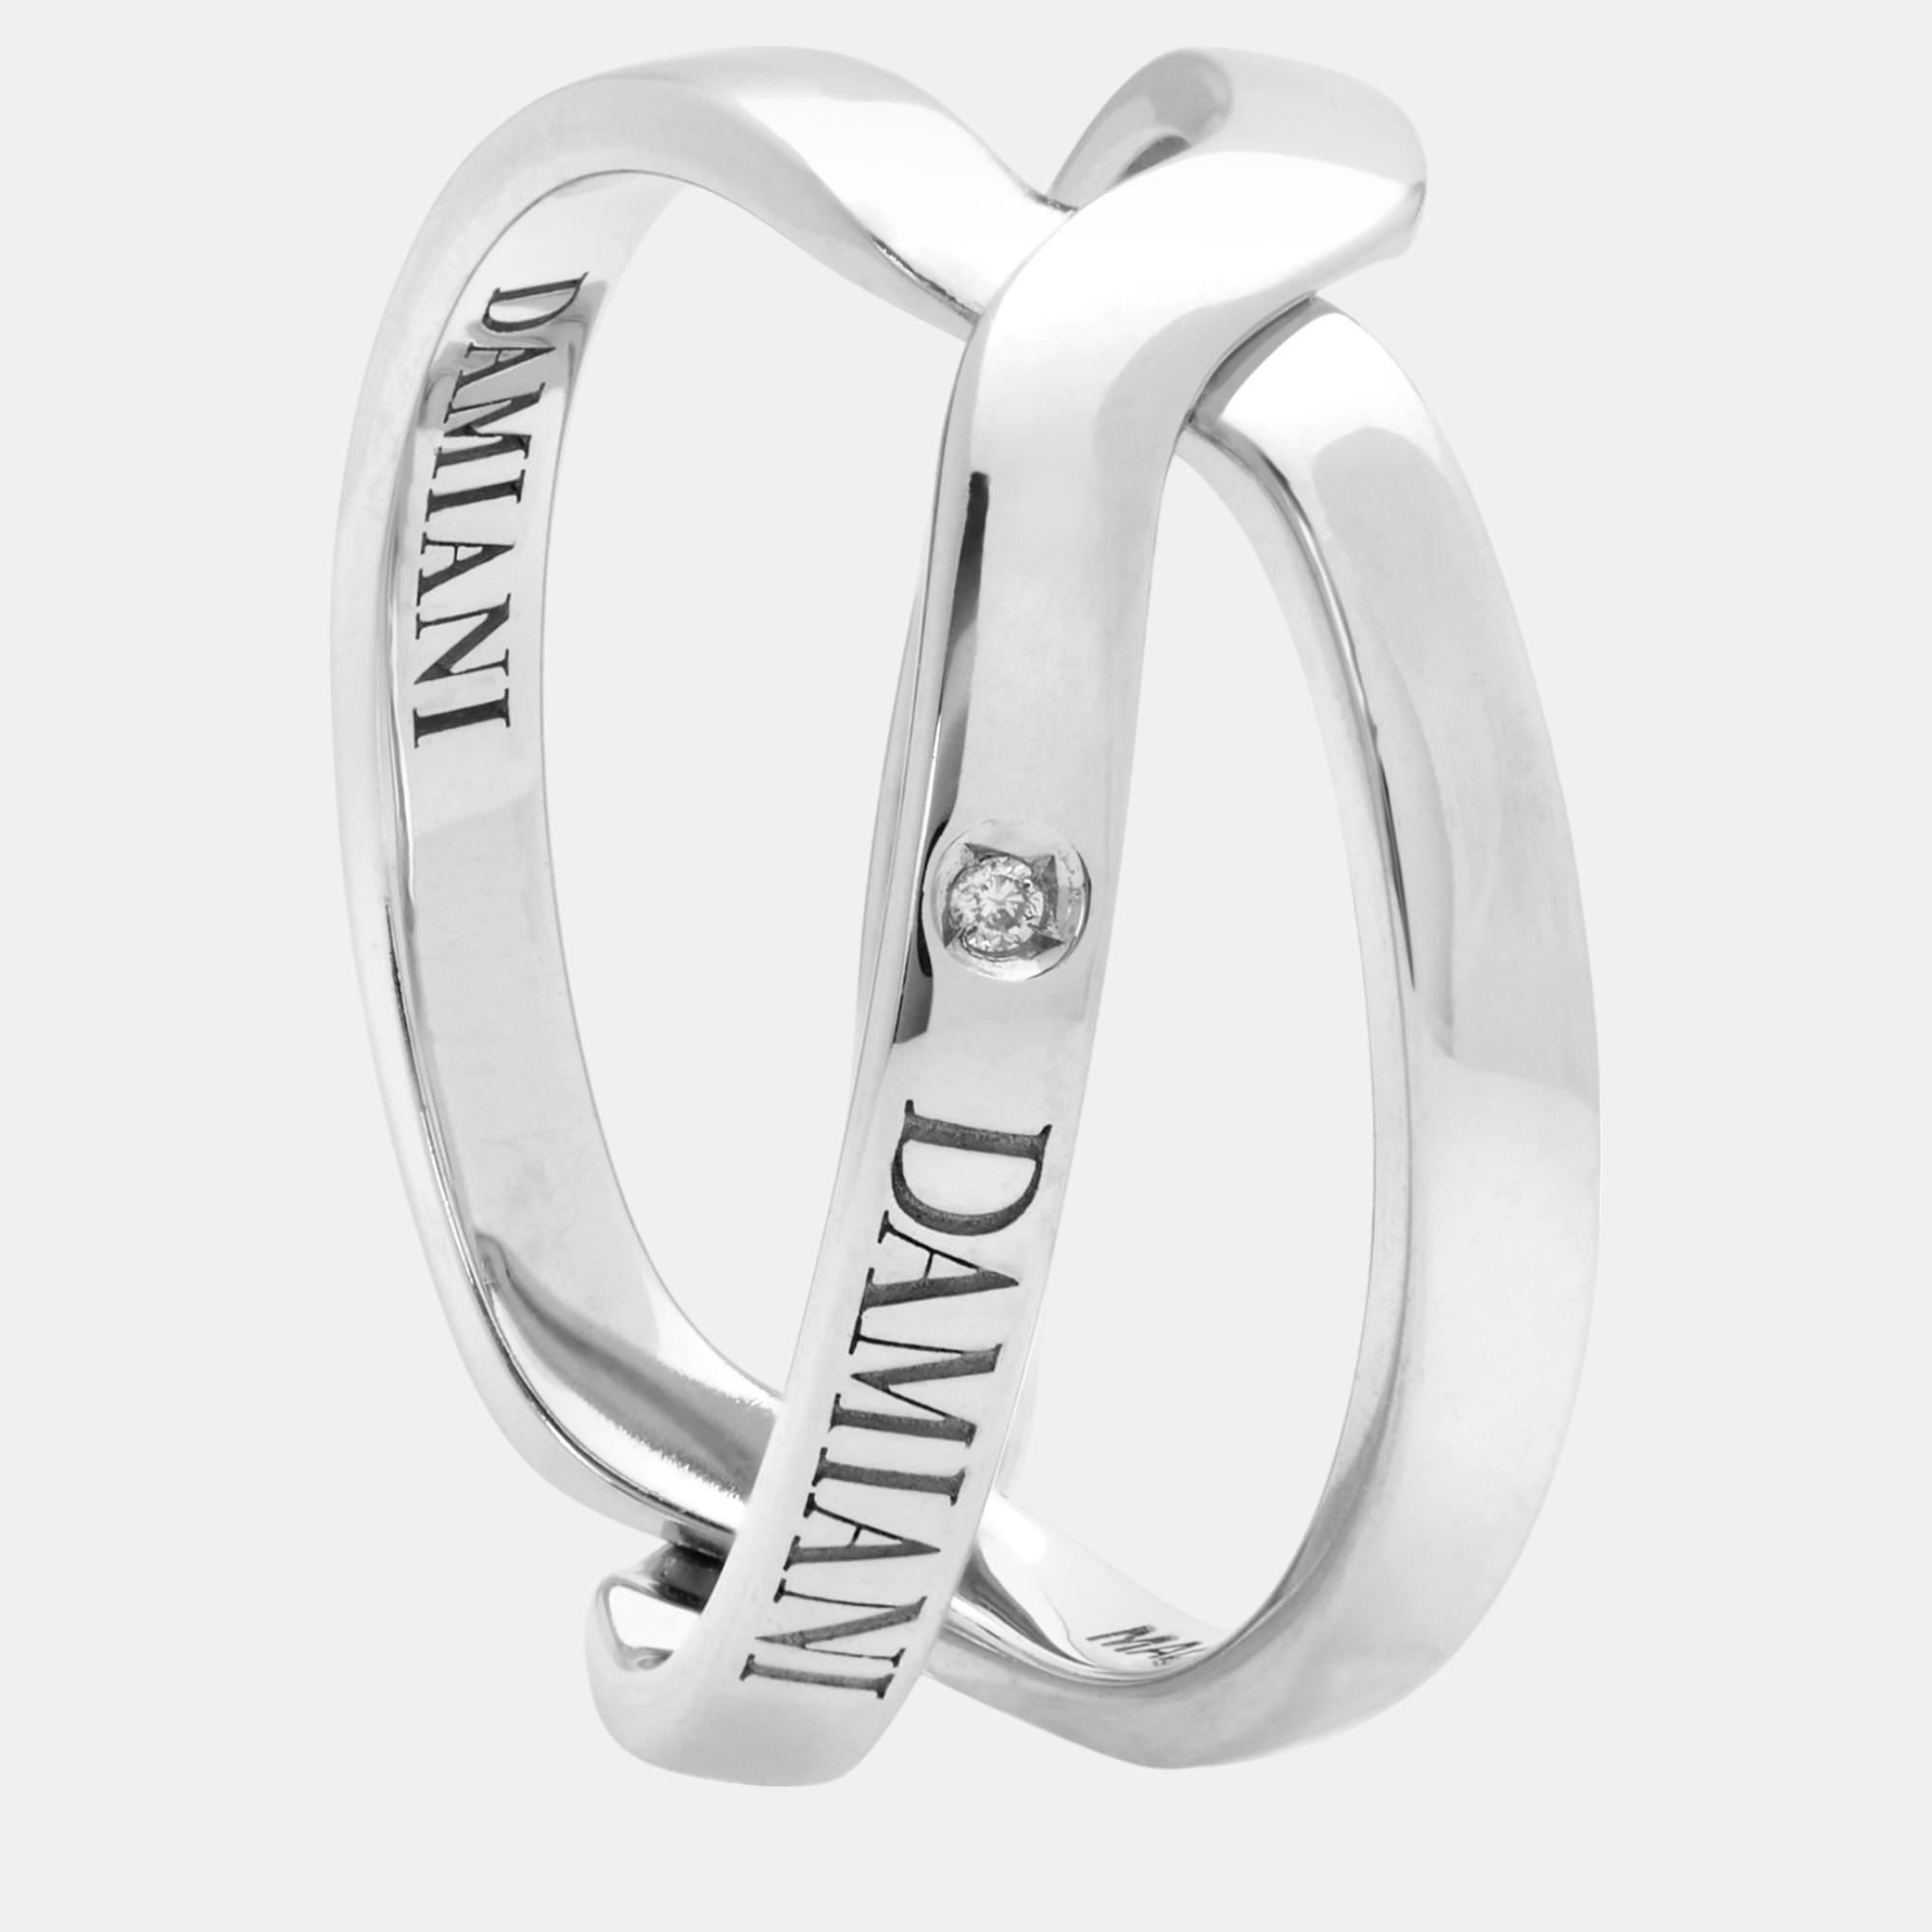 Damiani 18k white gold, diamond interlocking ring sz. 5.5